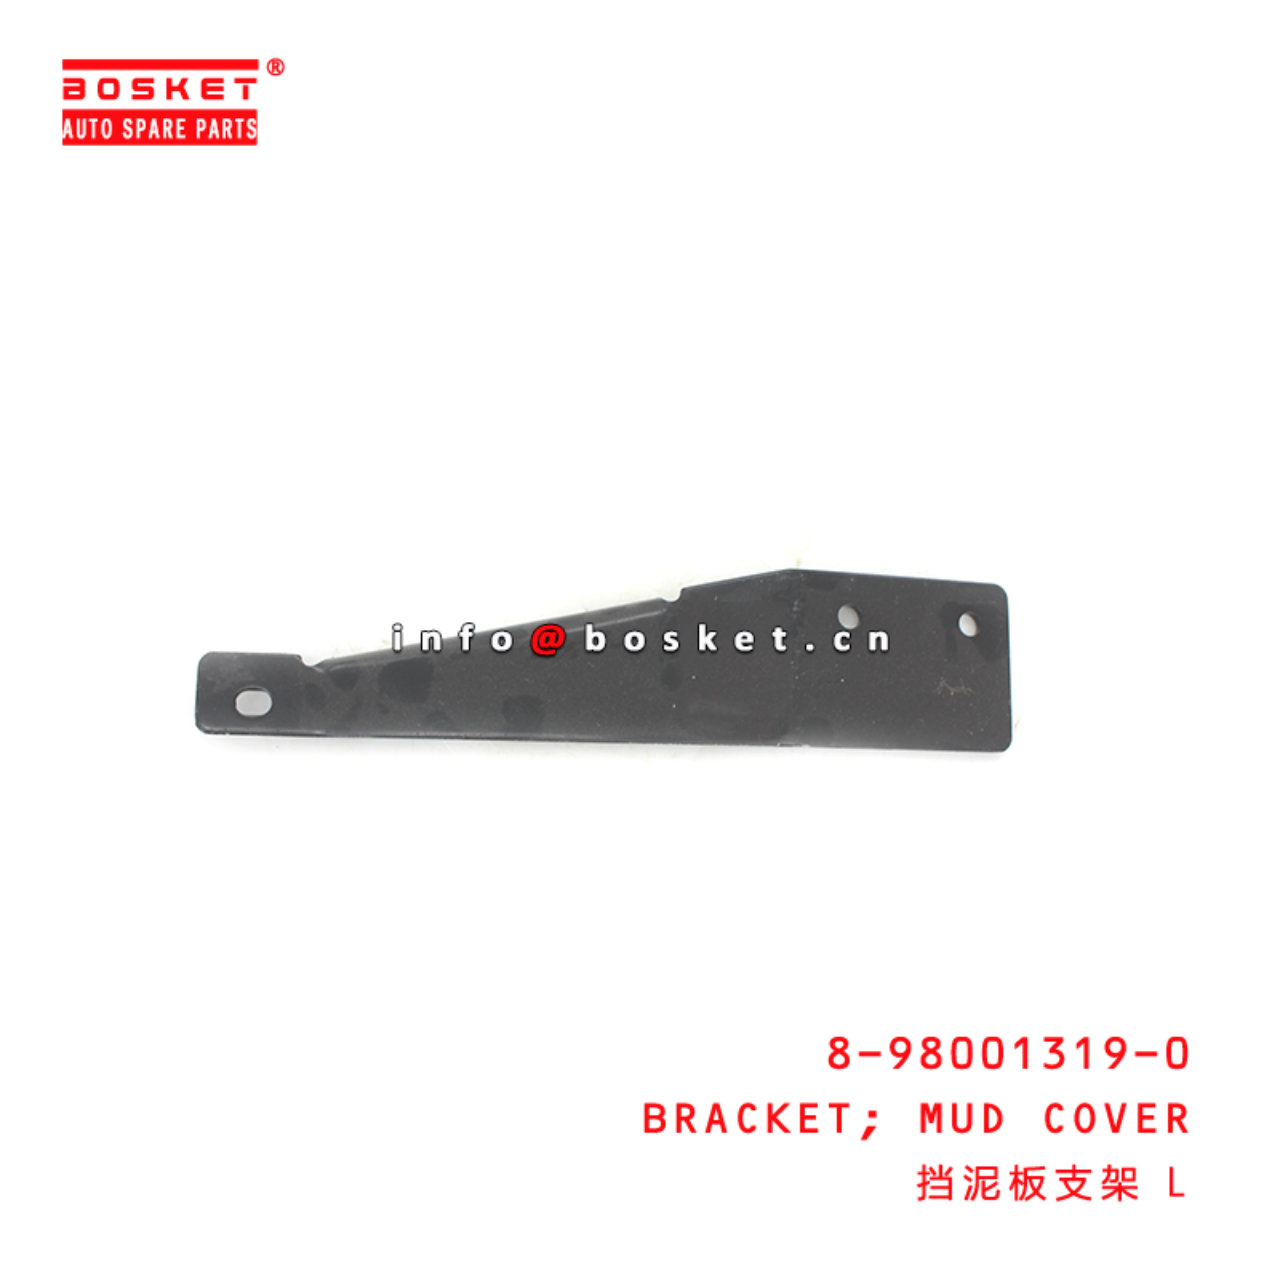 8-98001319-0 Mud Cover Bracket Suitable for ISUZU NPR75 4HK1 8980013190